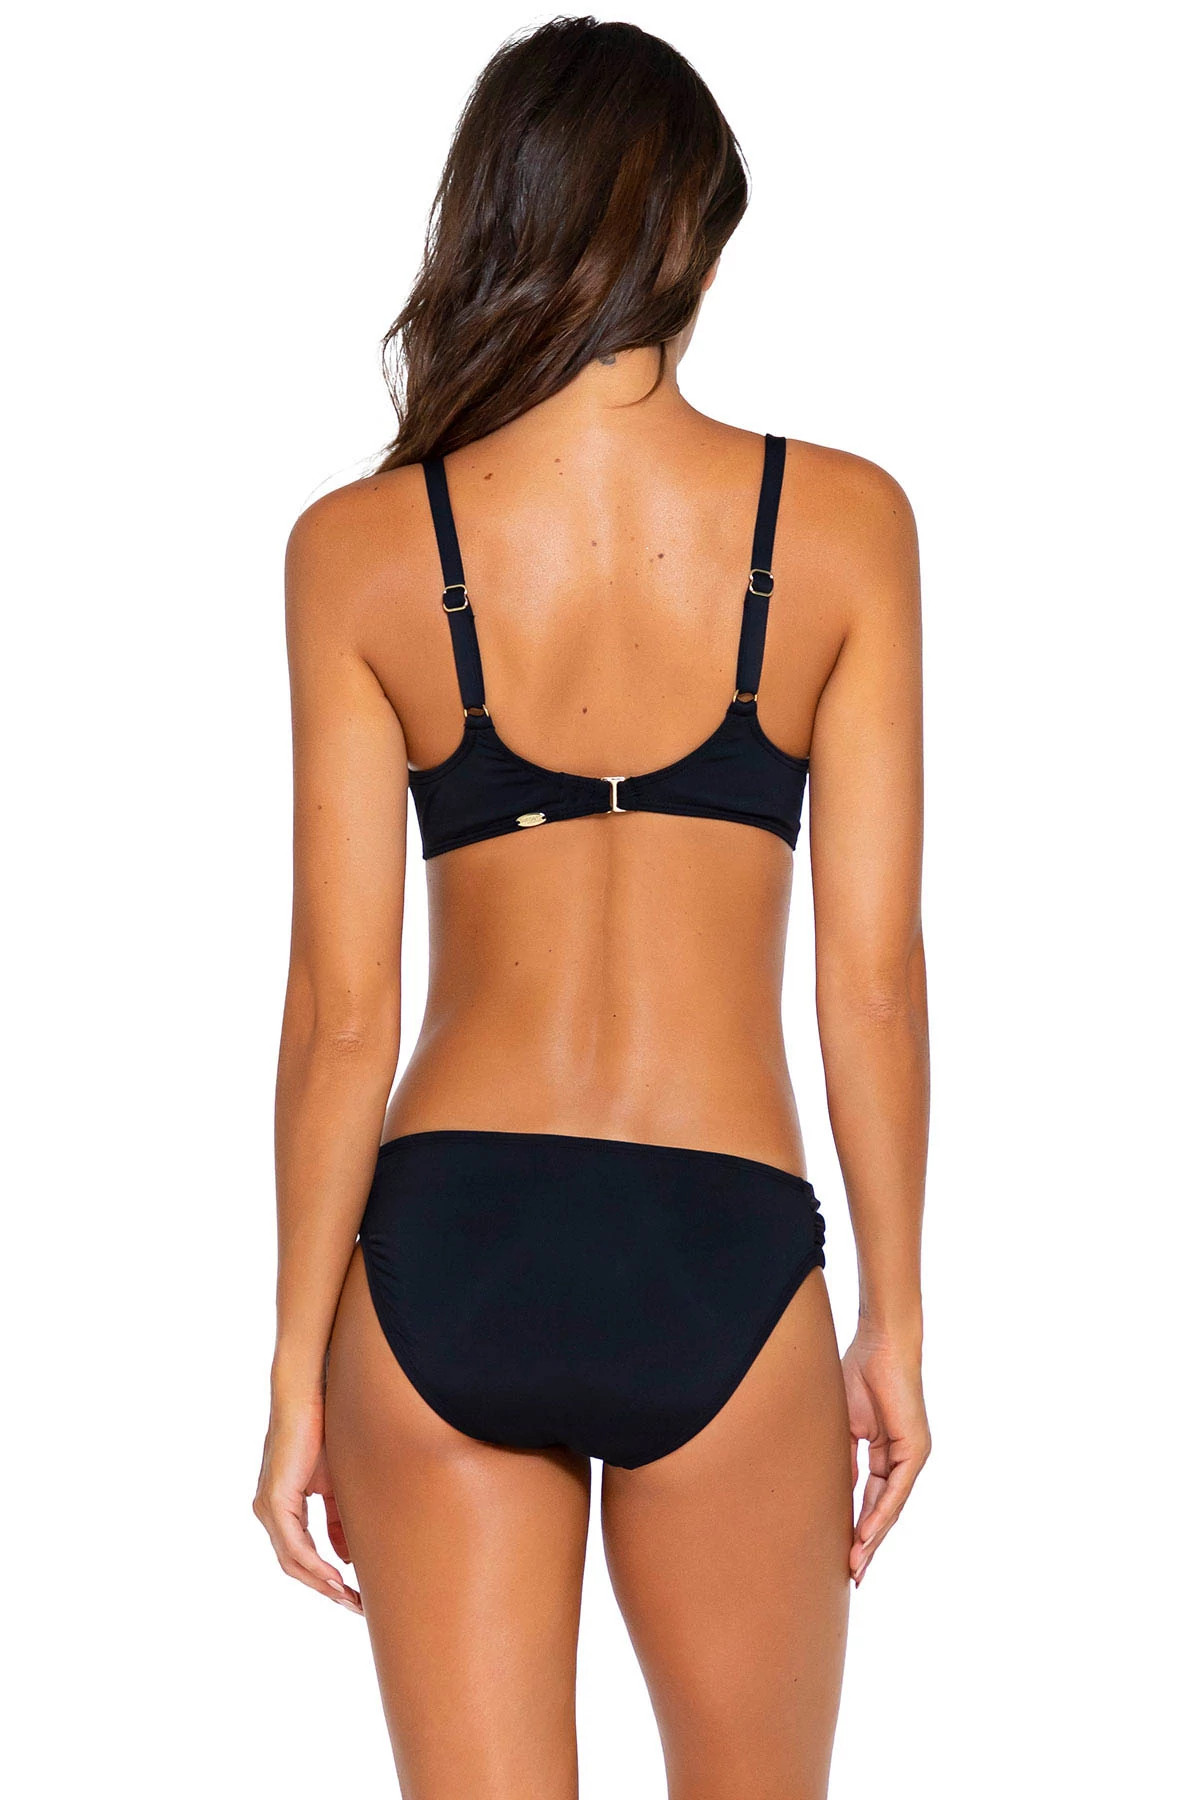 BLACK Carmen Underwire Bra Bikini Top (E-H Cup) image number 2